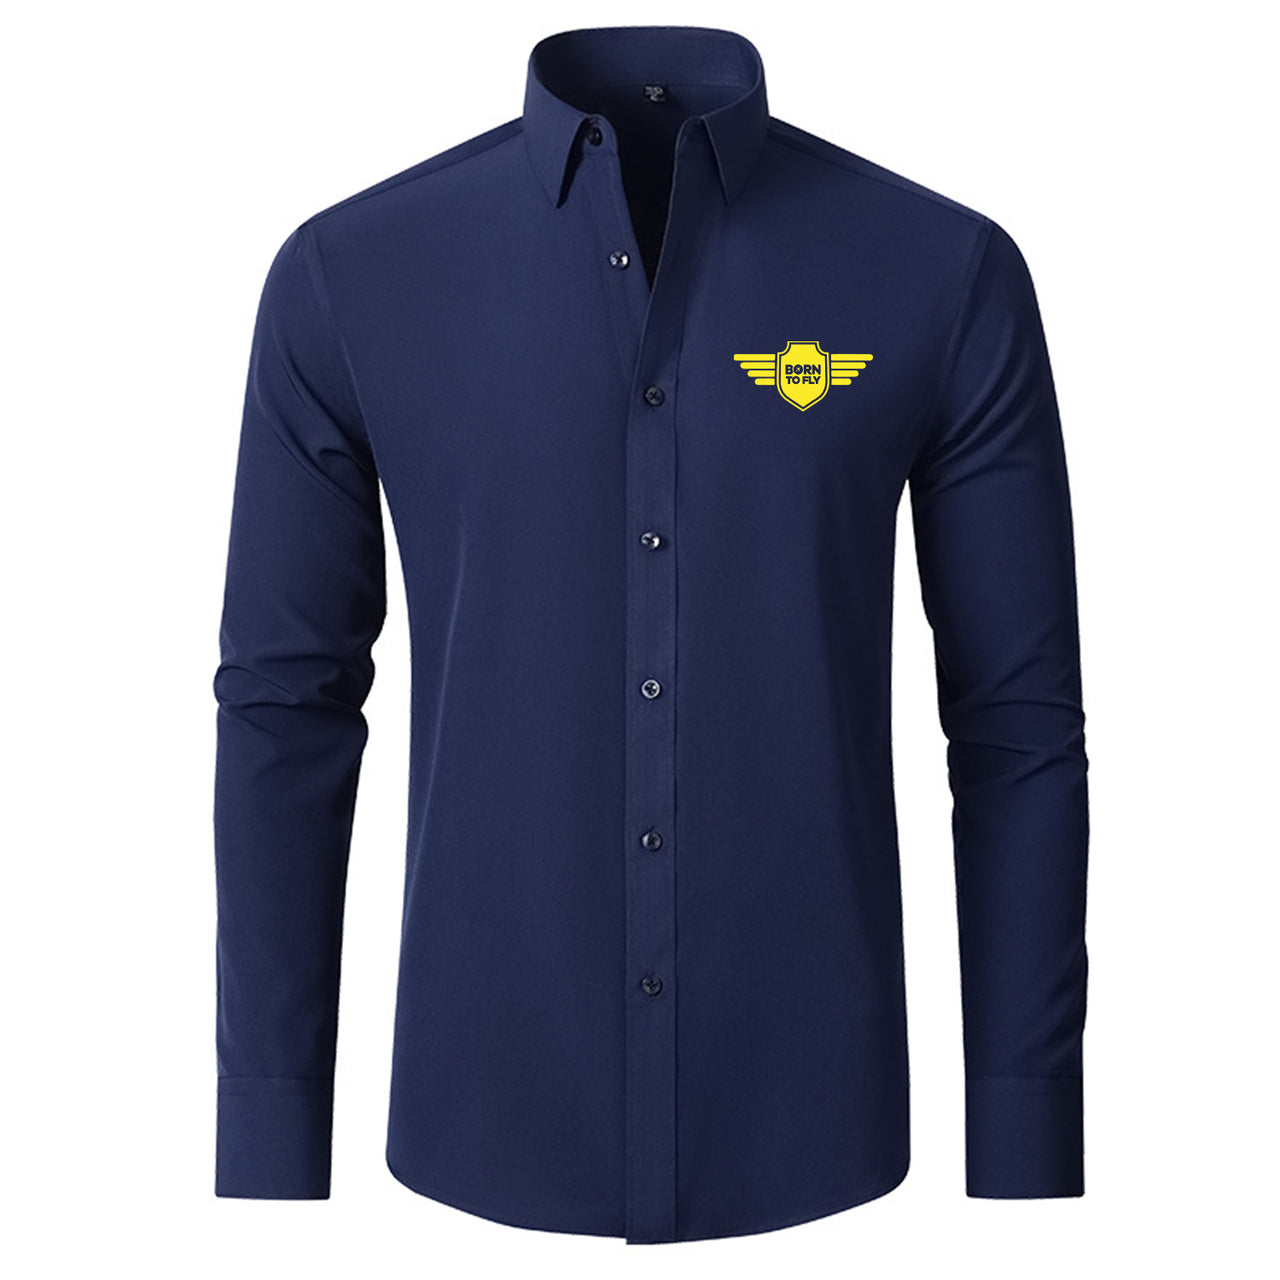 Born To Fly & Badge Designed Long Sleeve Shirts